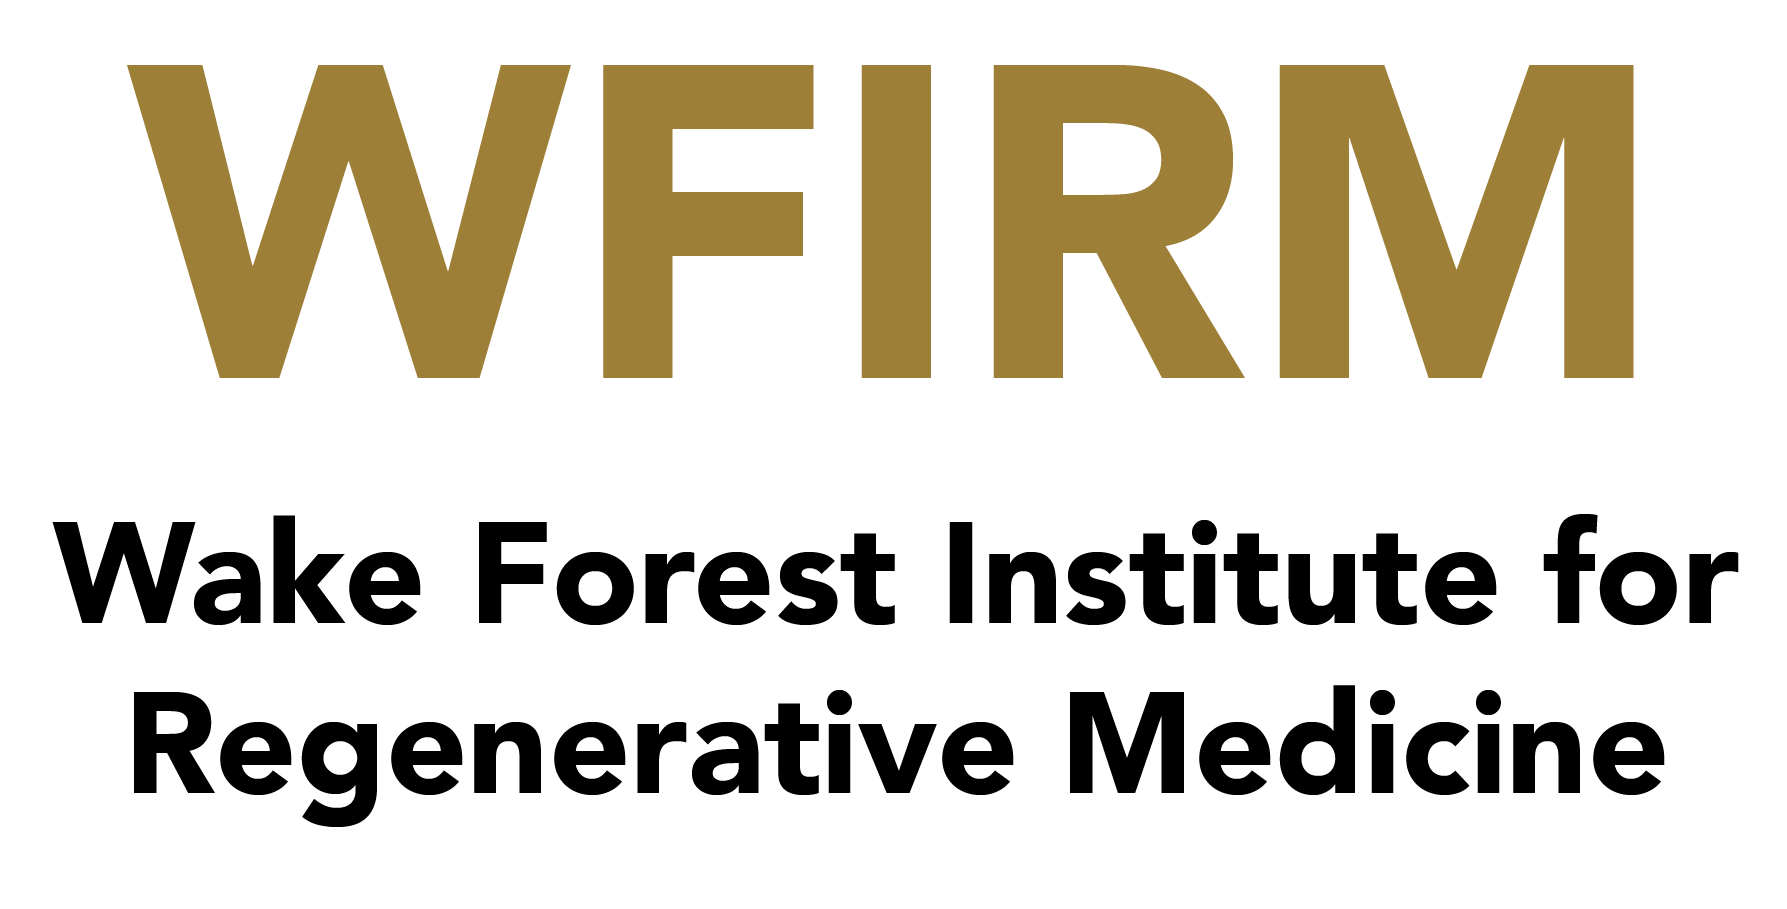 WFIRM logo